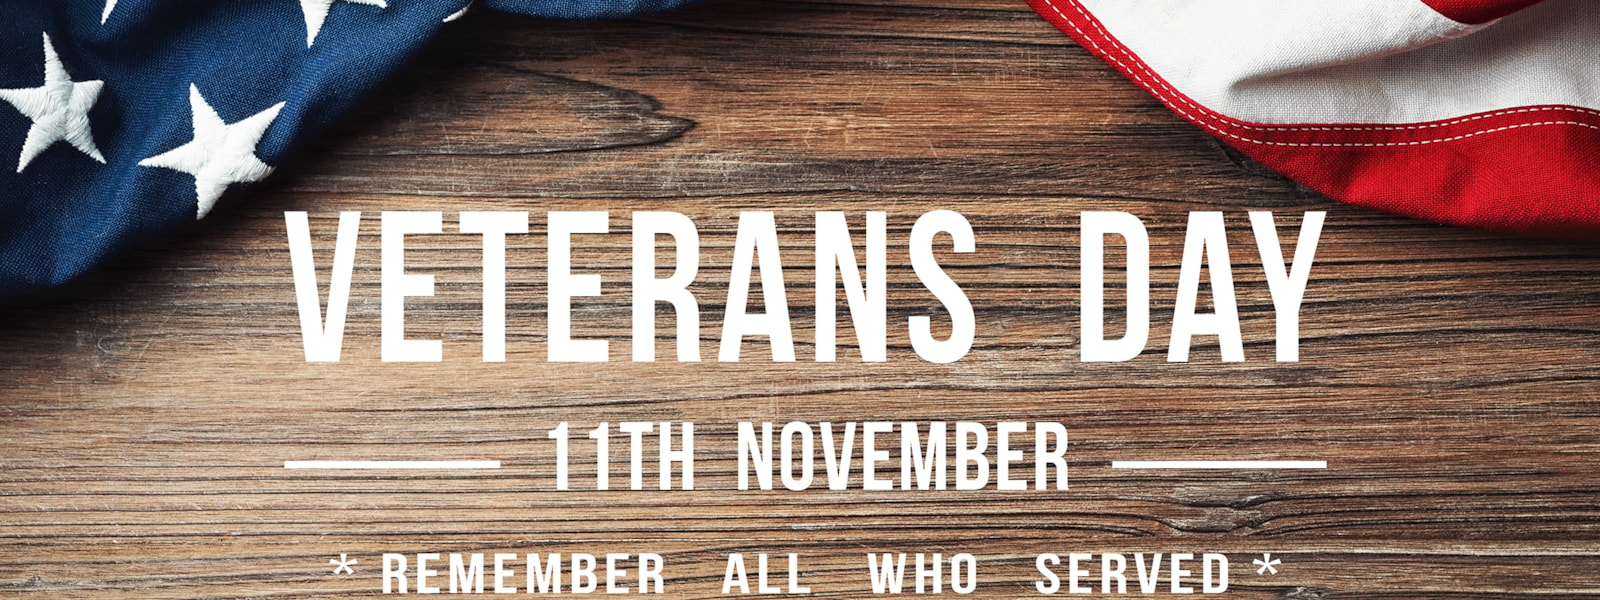 Veterans Day November 11th 